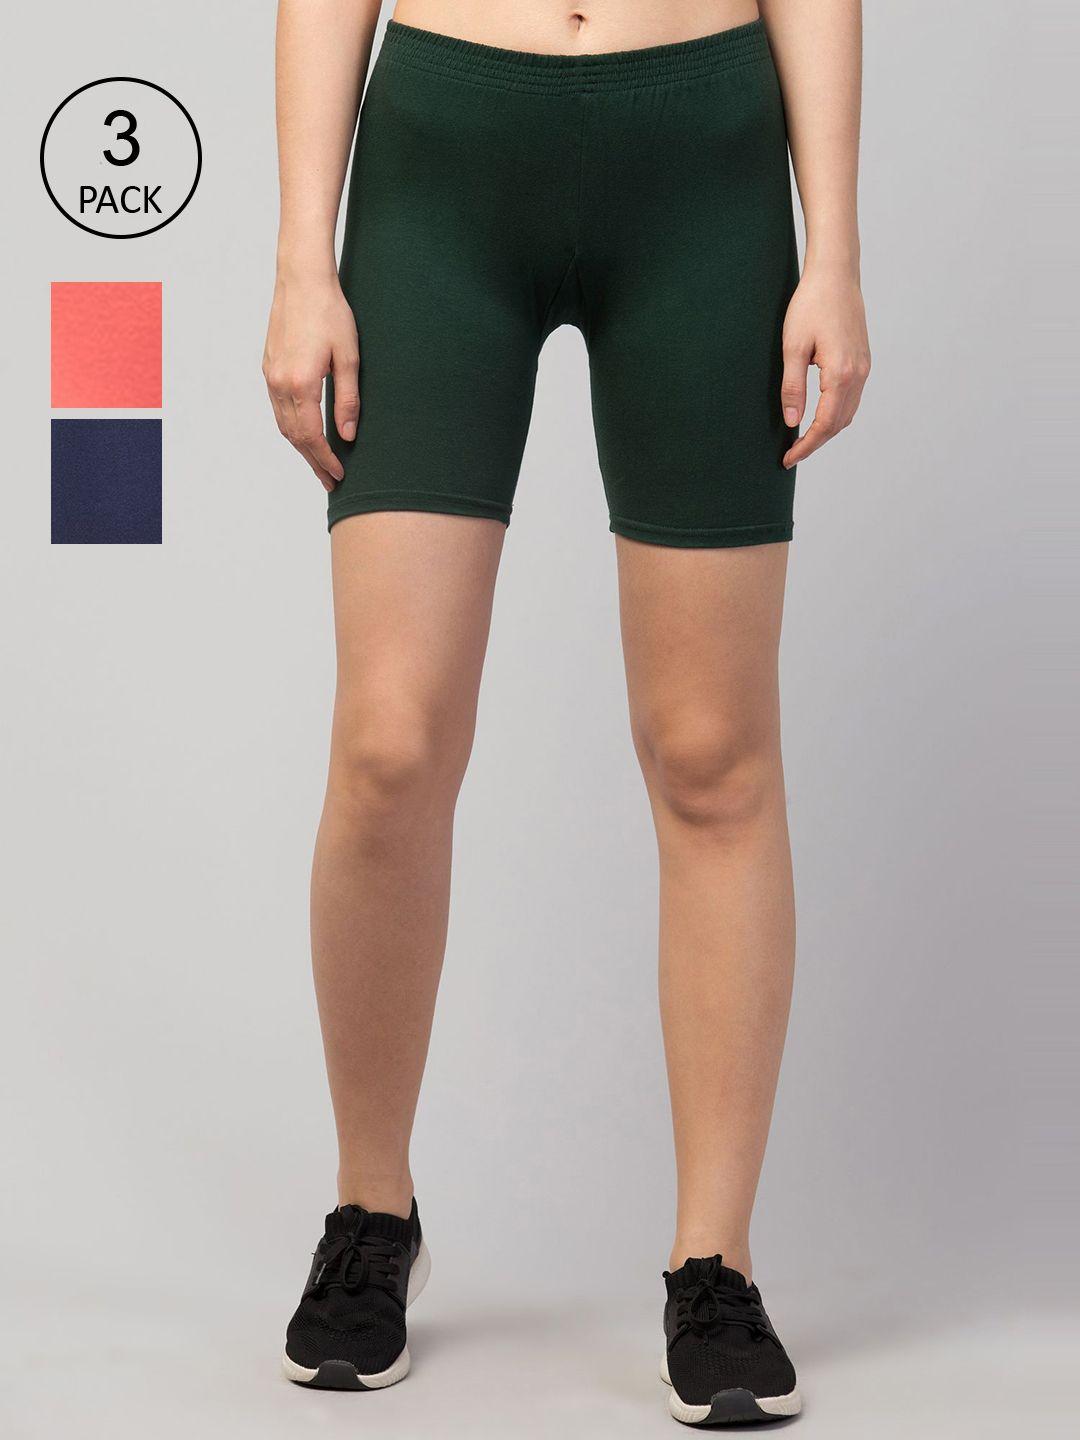 apraa-&-parma-women-green-slim-fit-cycling-sports-shorts